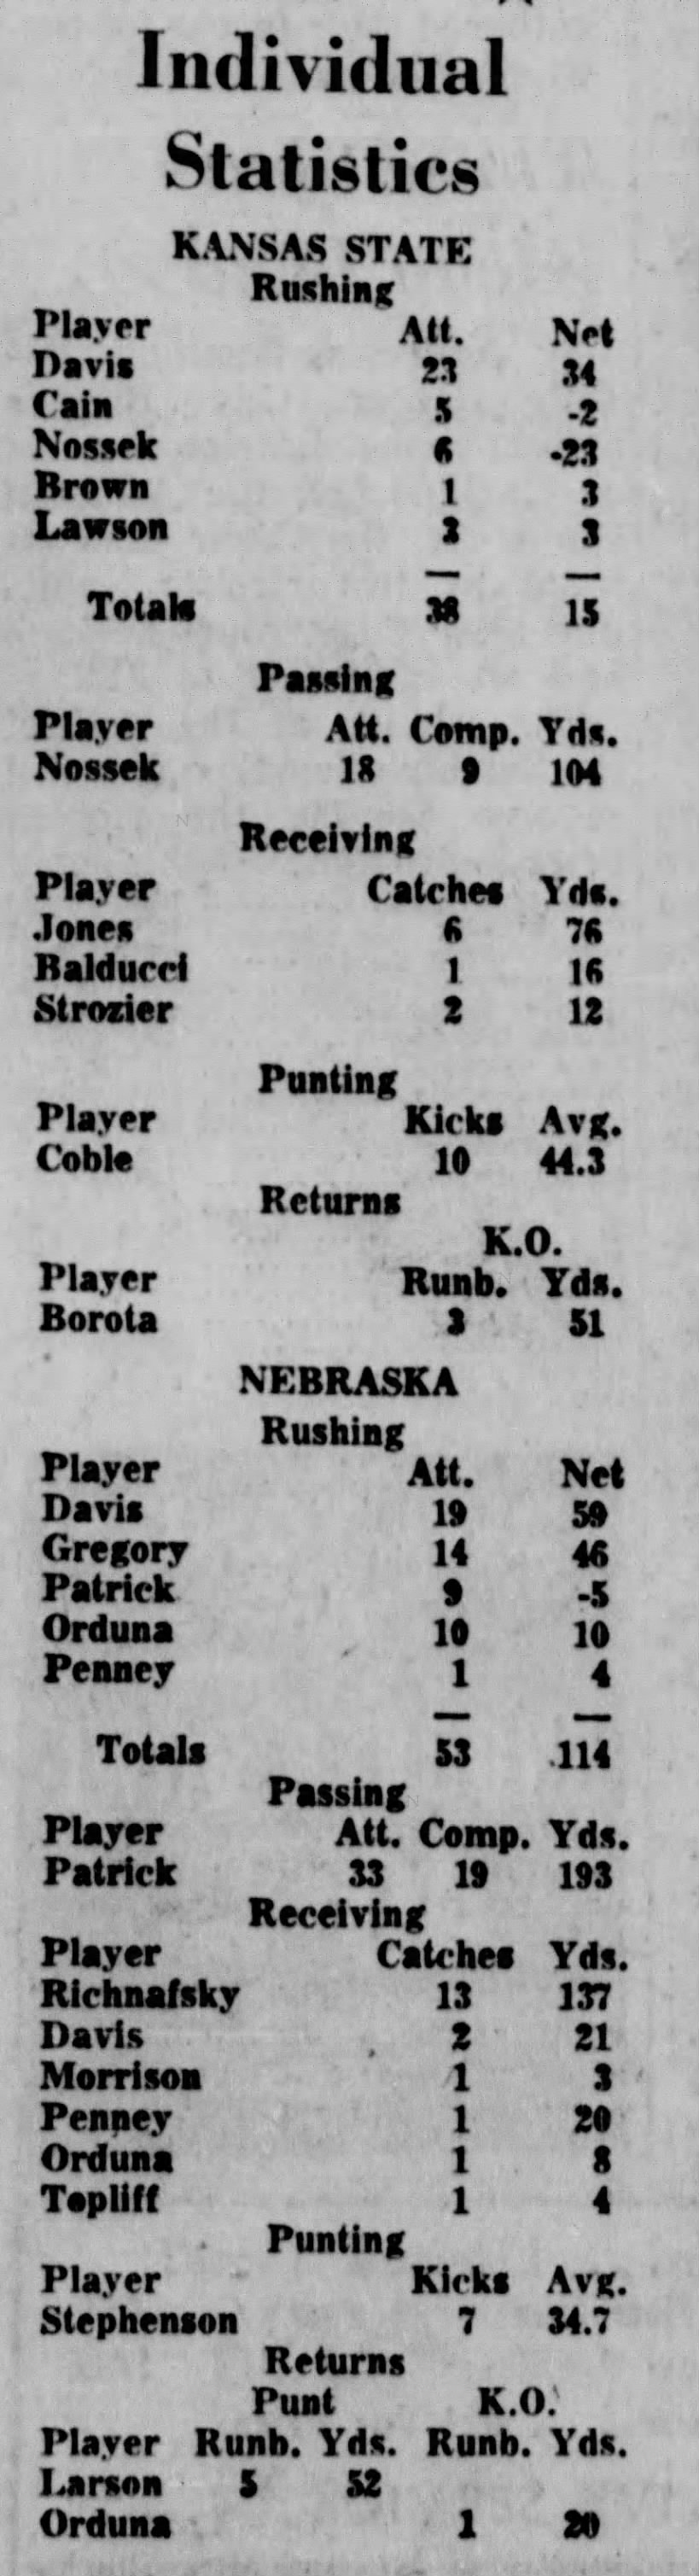 1967 Nebraska-Kansas State individual stats